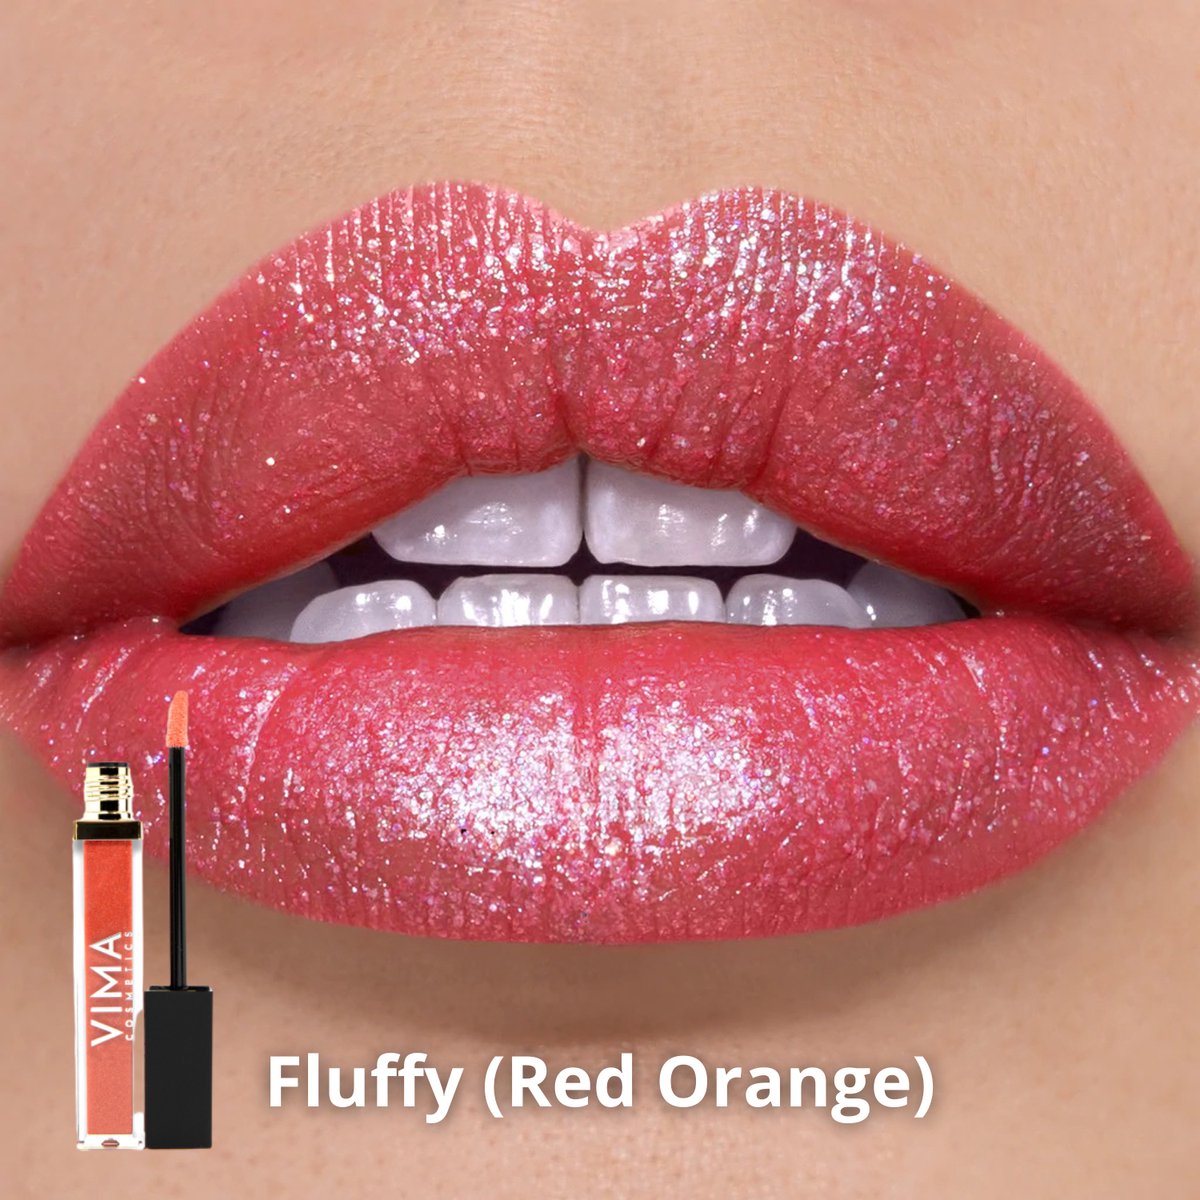 VIMA Lipgloss - Red Orange (Fluffy) - Hydraterend - Creamy - Volumegevende Lipgloss